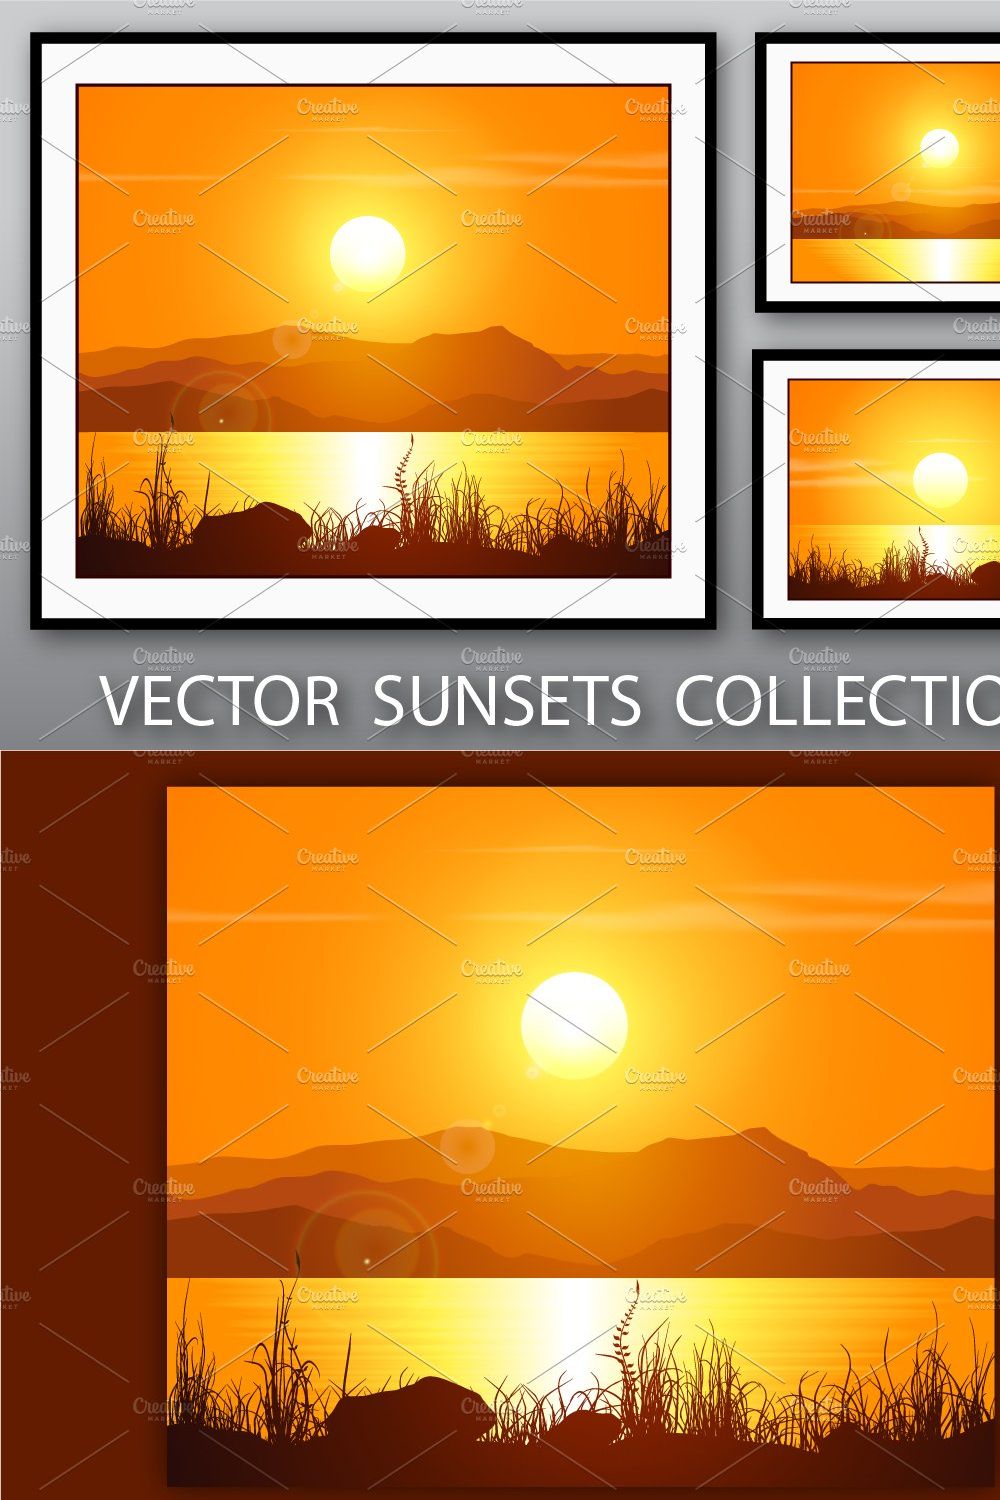 Sunset Landscapes Vector Set pinterest preview image.